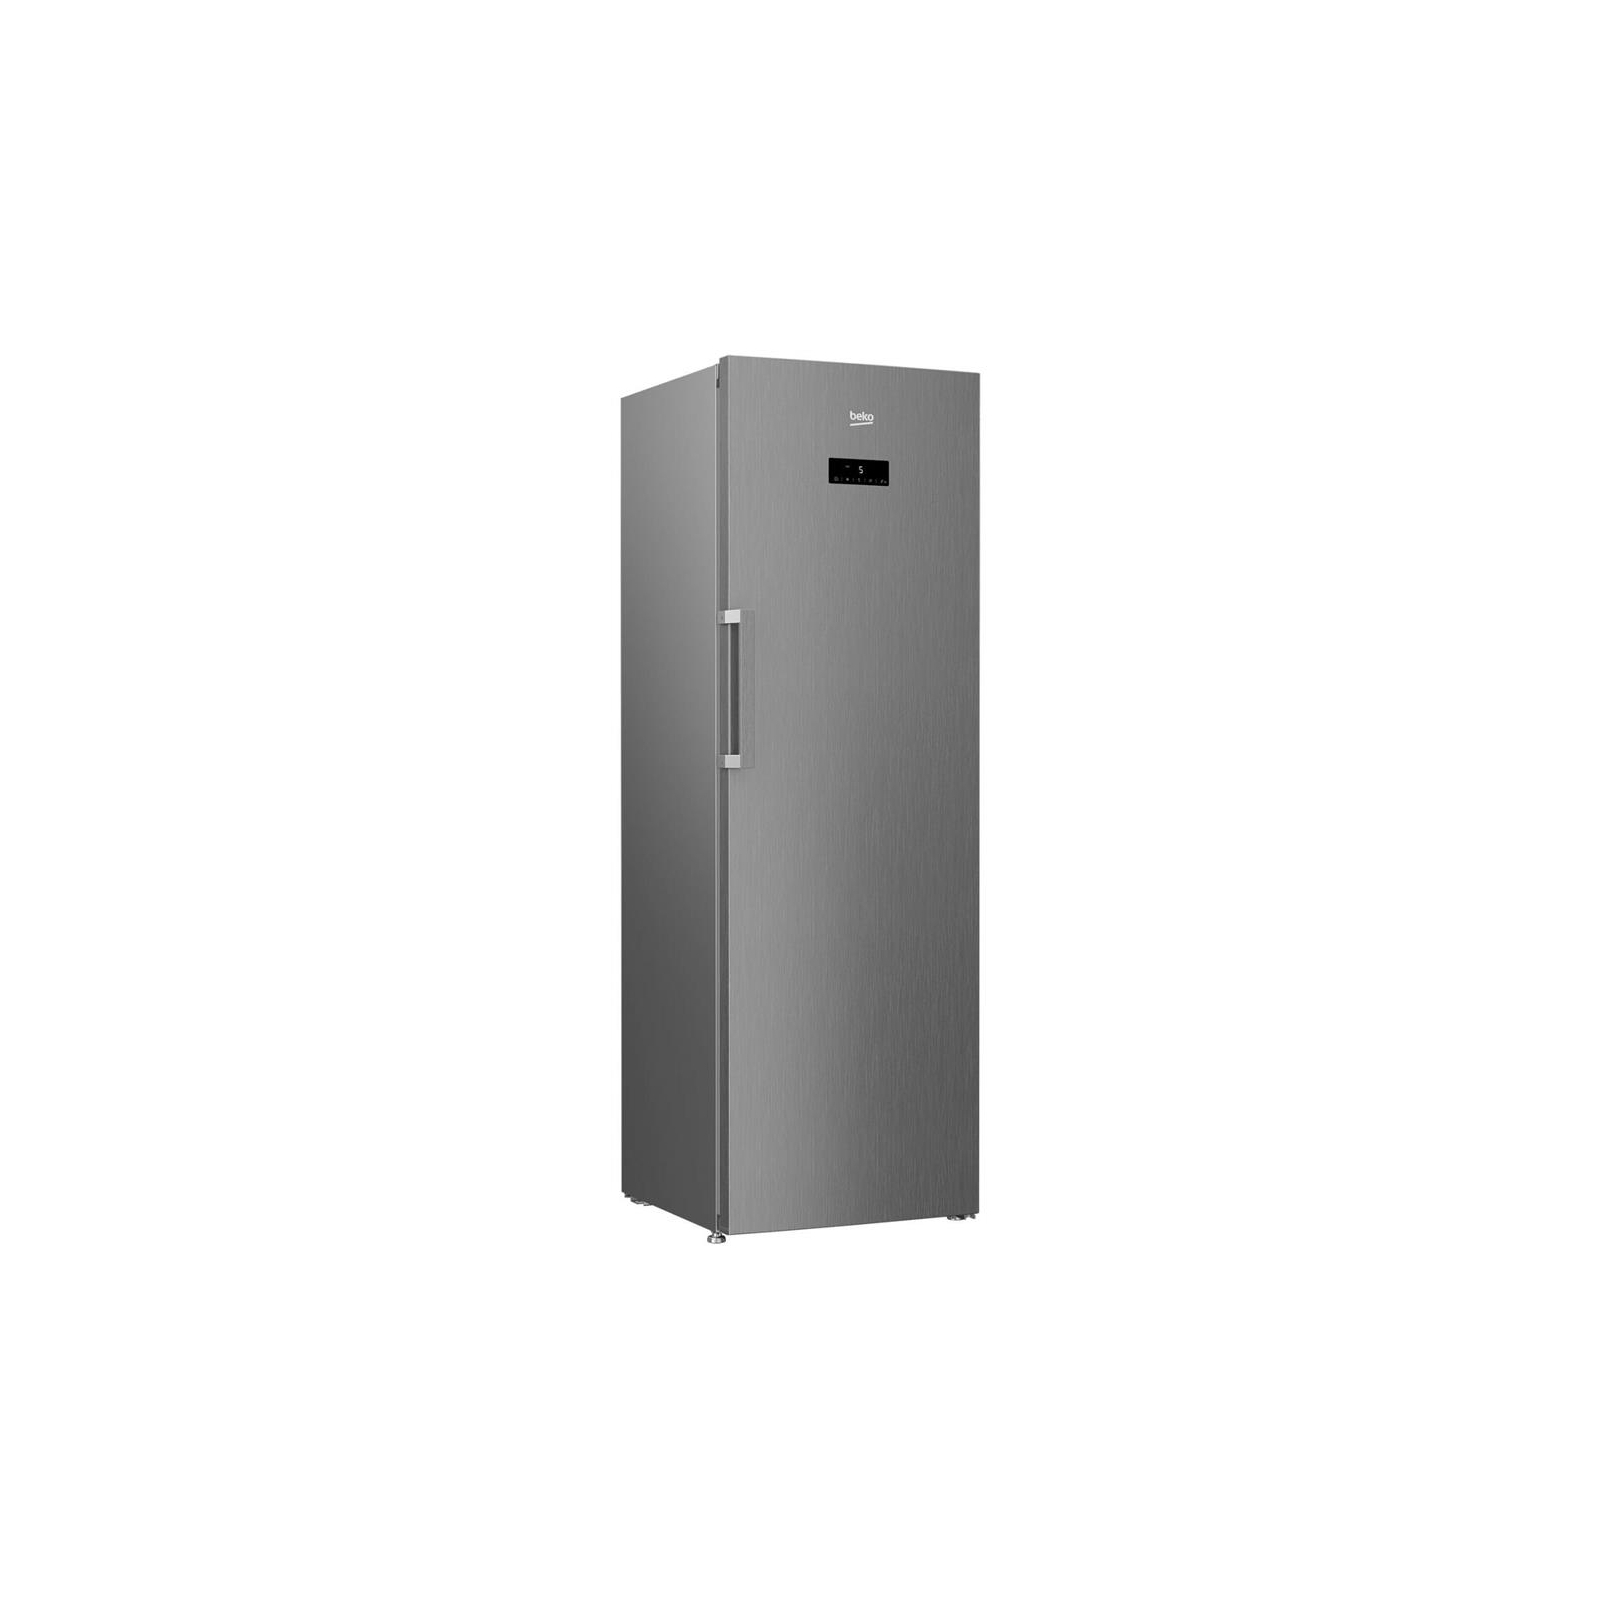 Холодильник Beko RSNE445E33X изображение 2